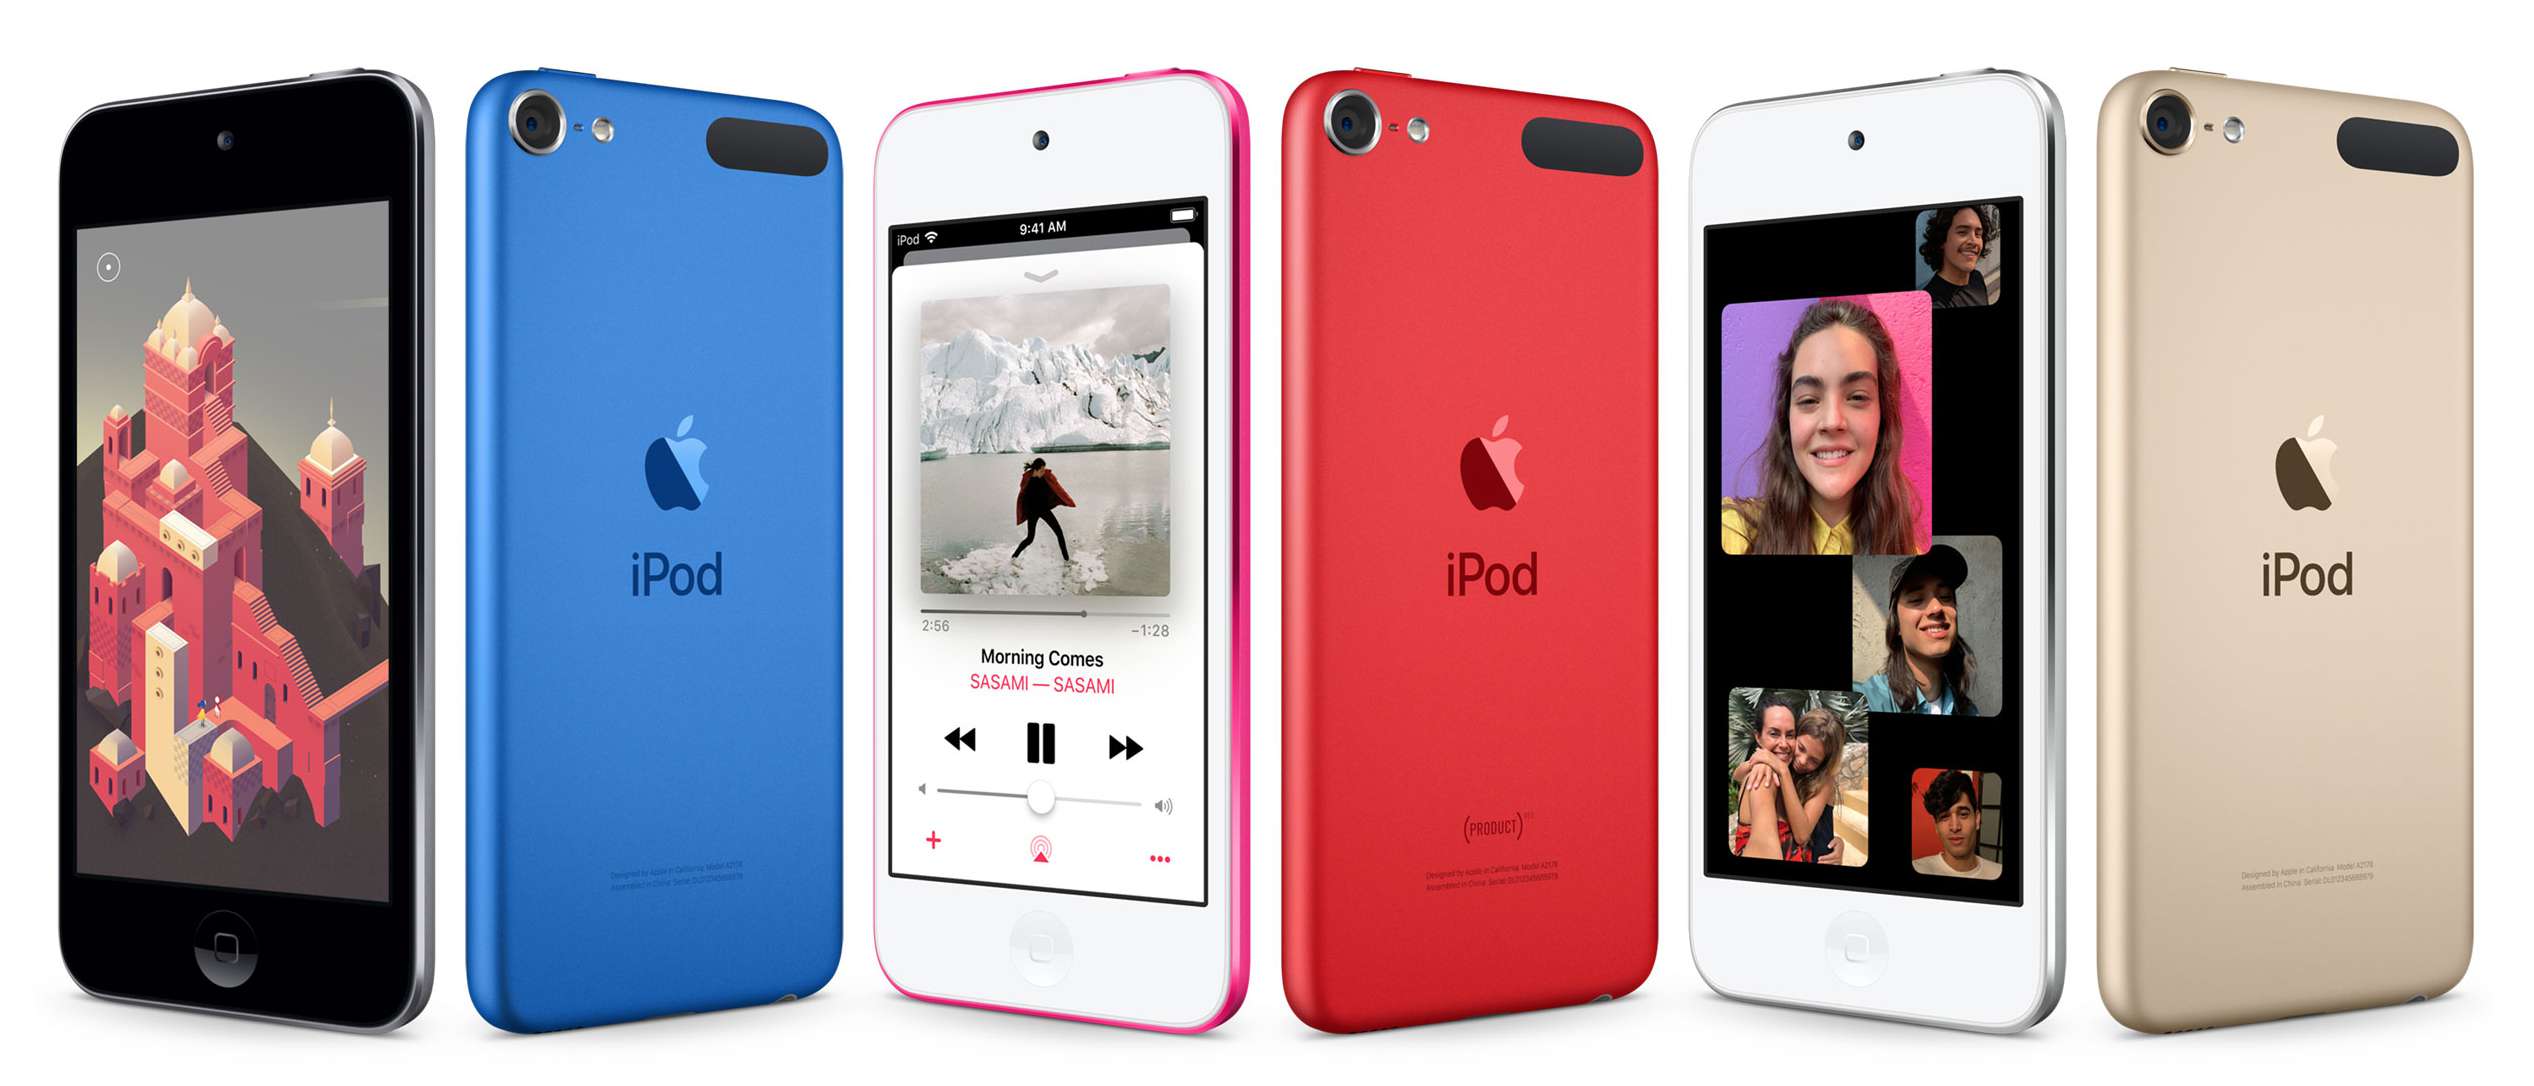 Конец эпохи: Apple прекращает производство плееров iPod